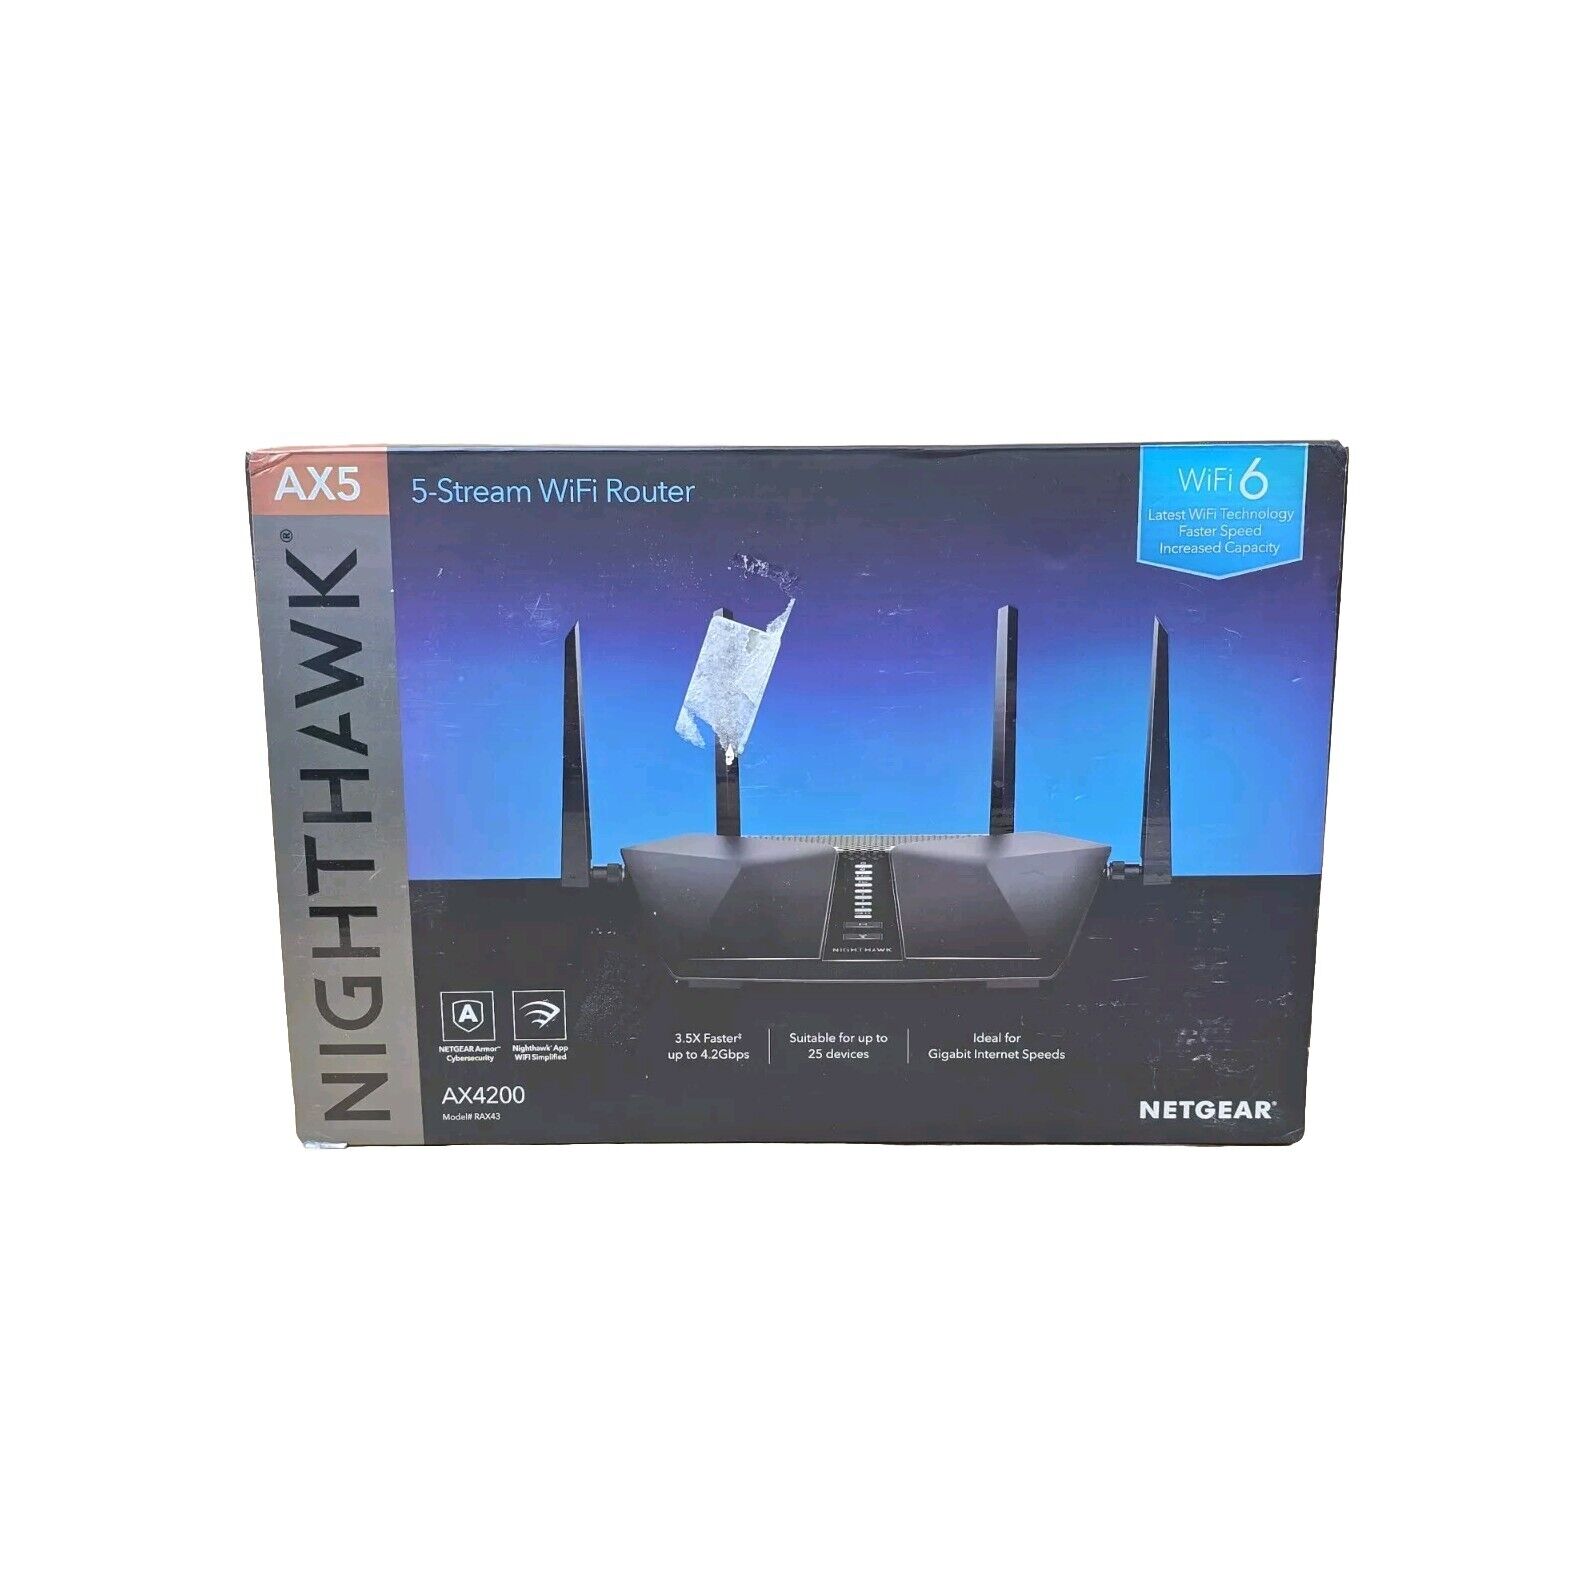 Netgear Nighthawk AX5 5-Stream WiFi 6 Router, Black New Open Box